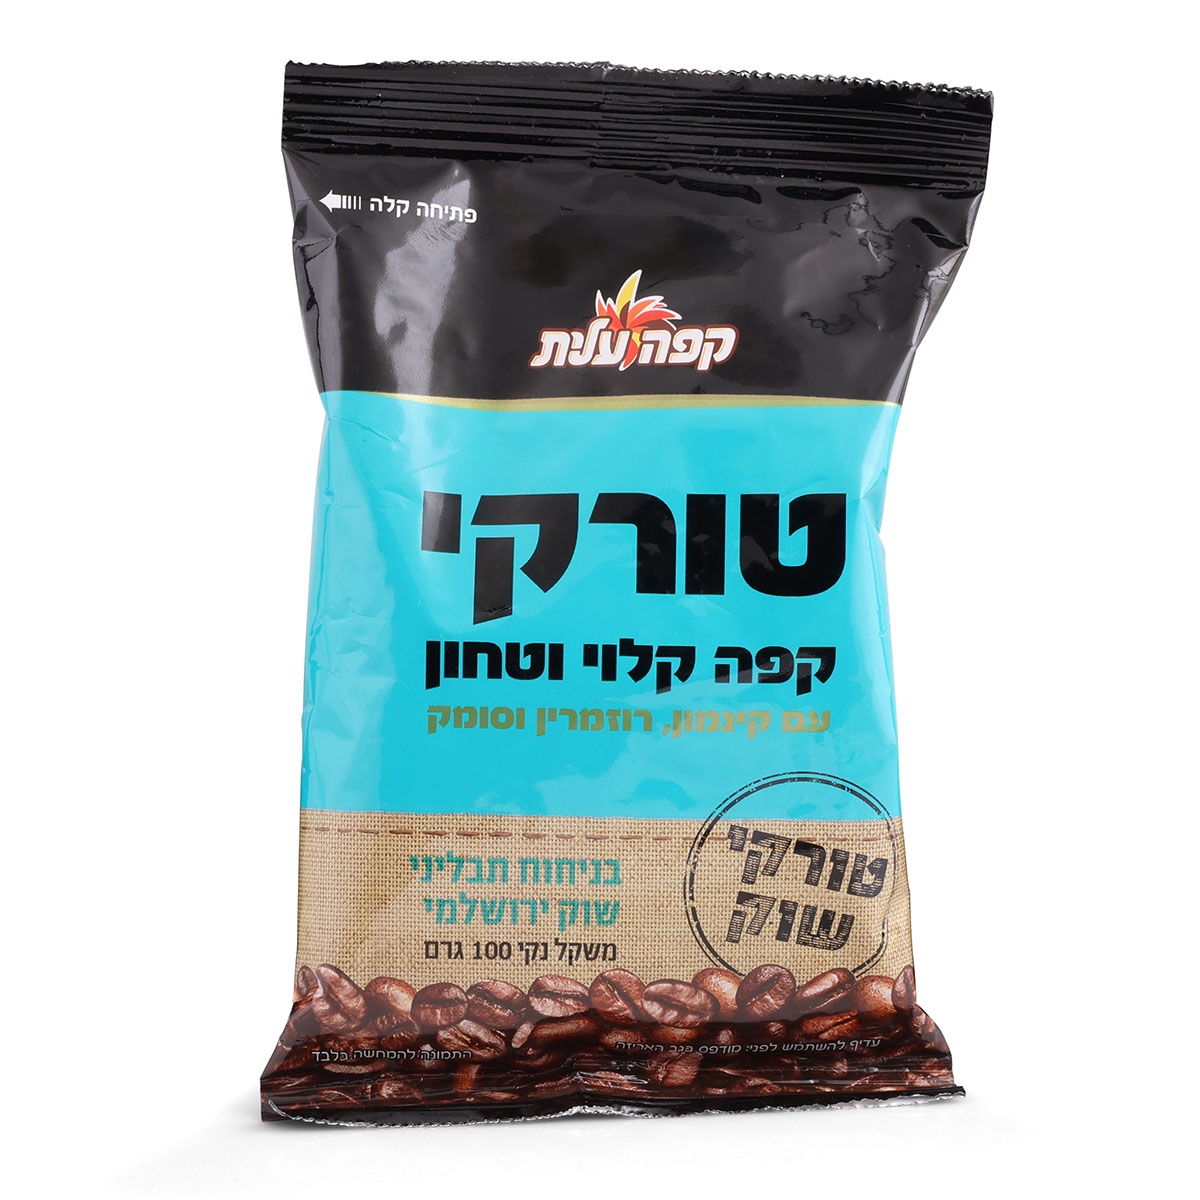 https://www.judaicawebstore.com/media/catalog/product/cache/54e028c734839e76288222a68a65f1c3/t/u/turkish_coffee_-_cinnamon_rosemary_sumac.jpg